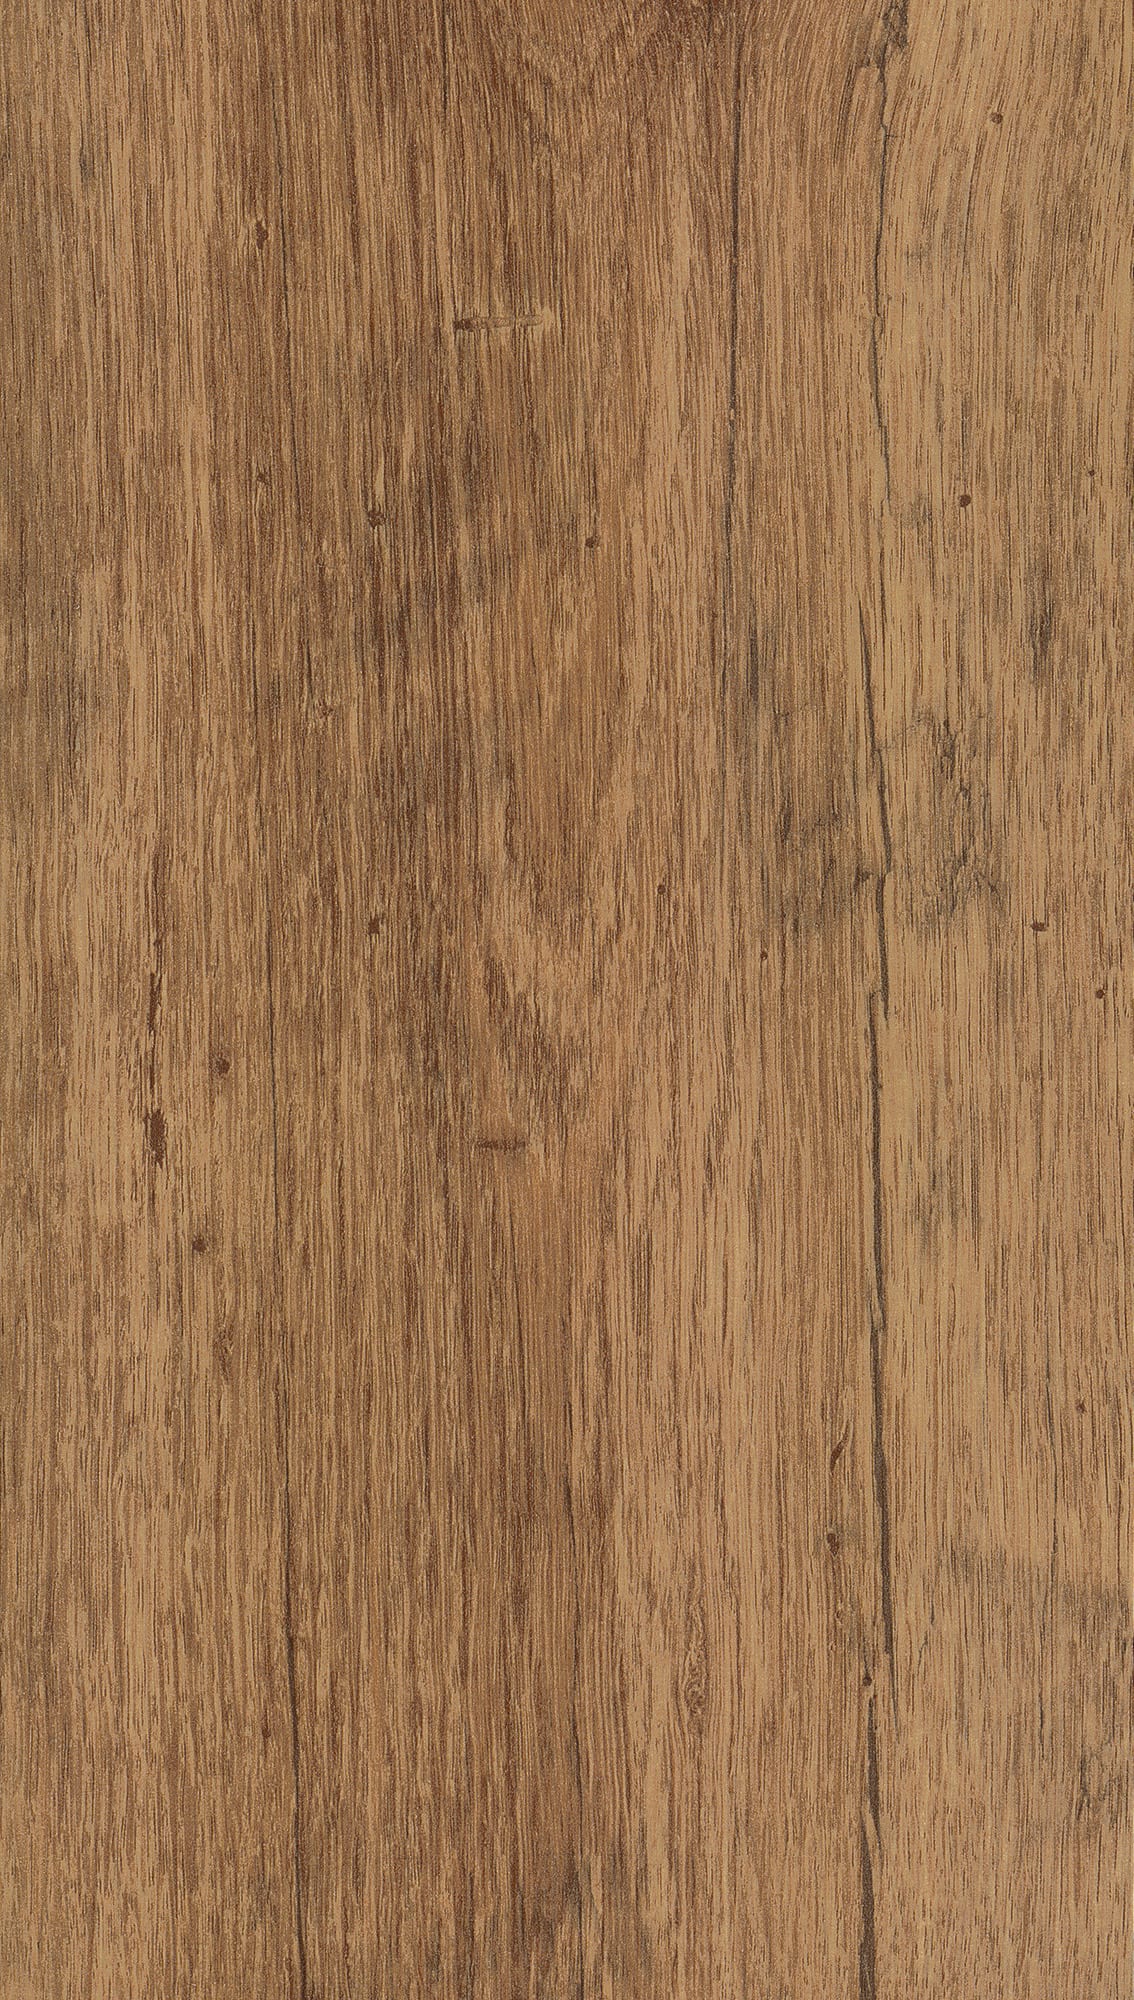 Everley Oak 6mm Laminate Flooring - Sample